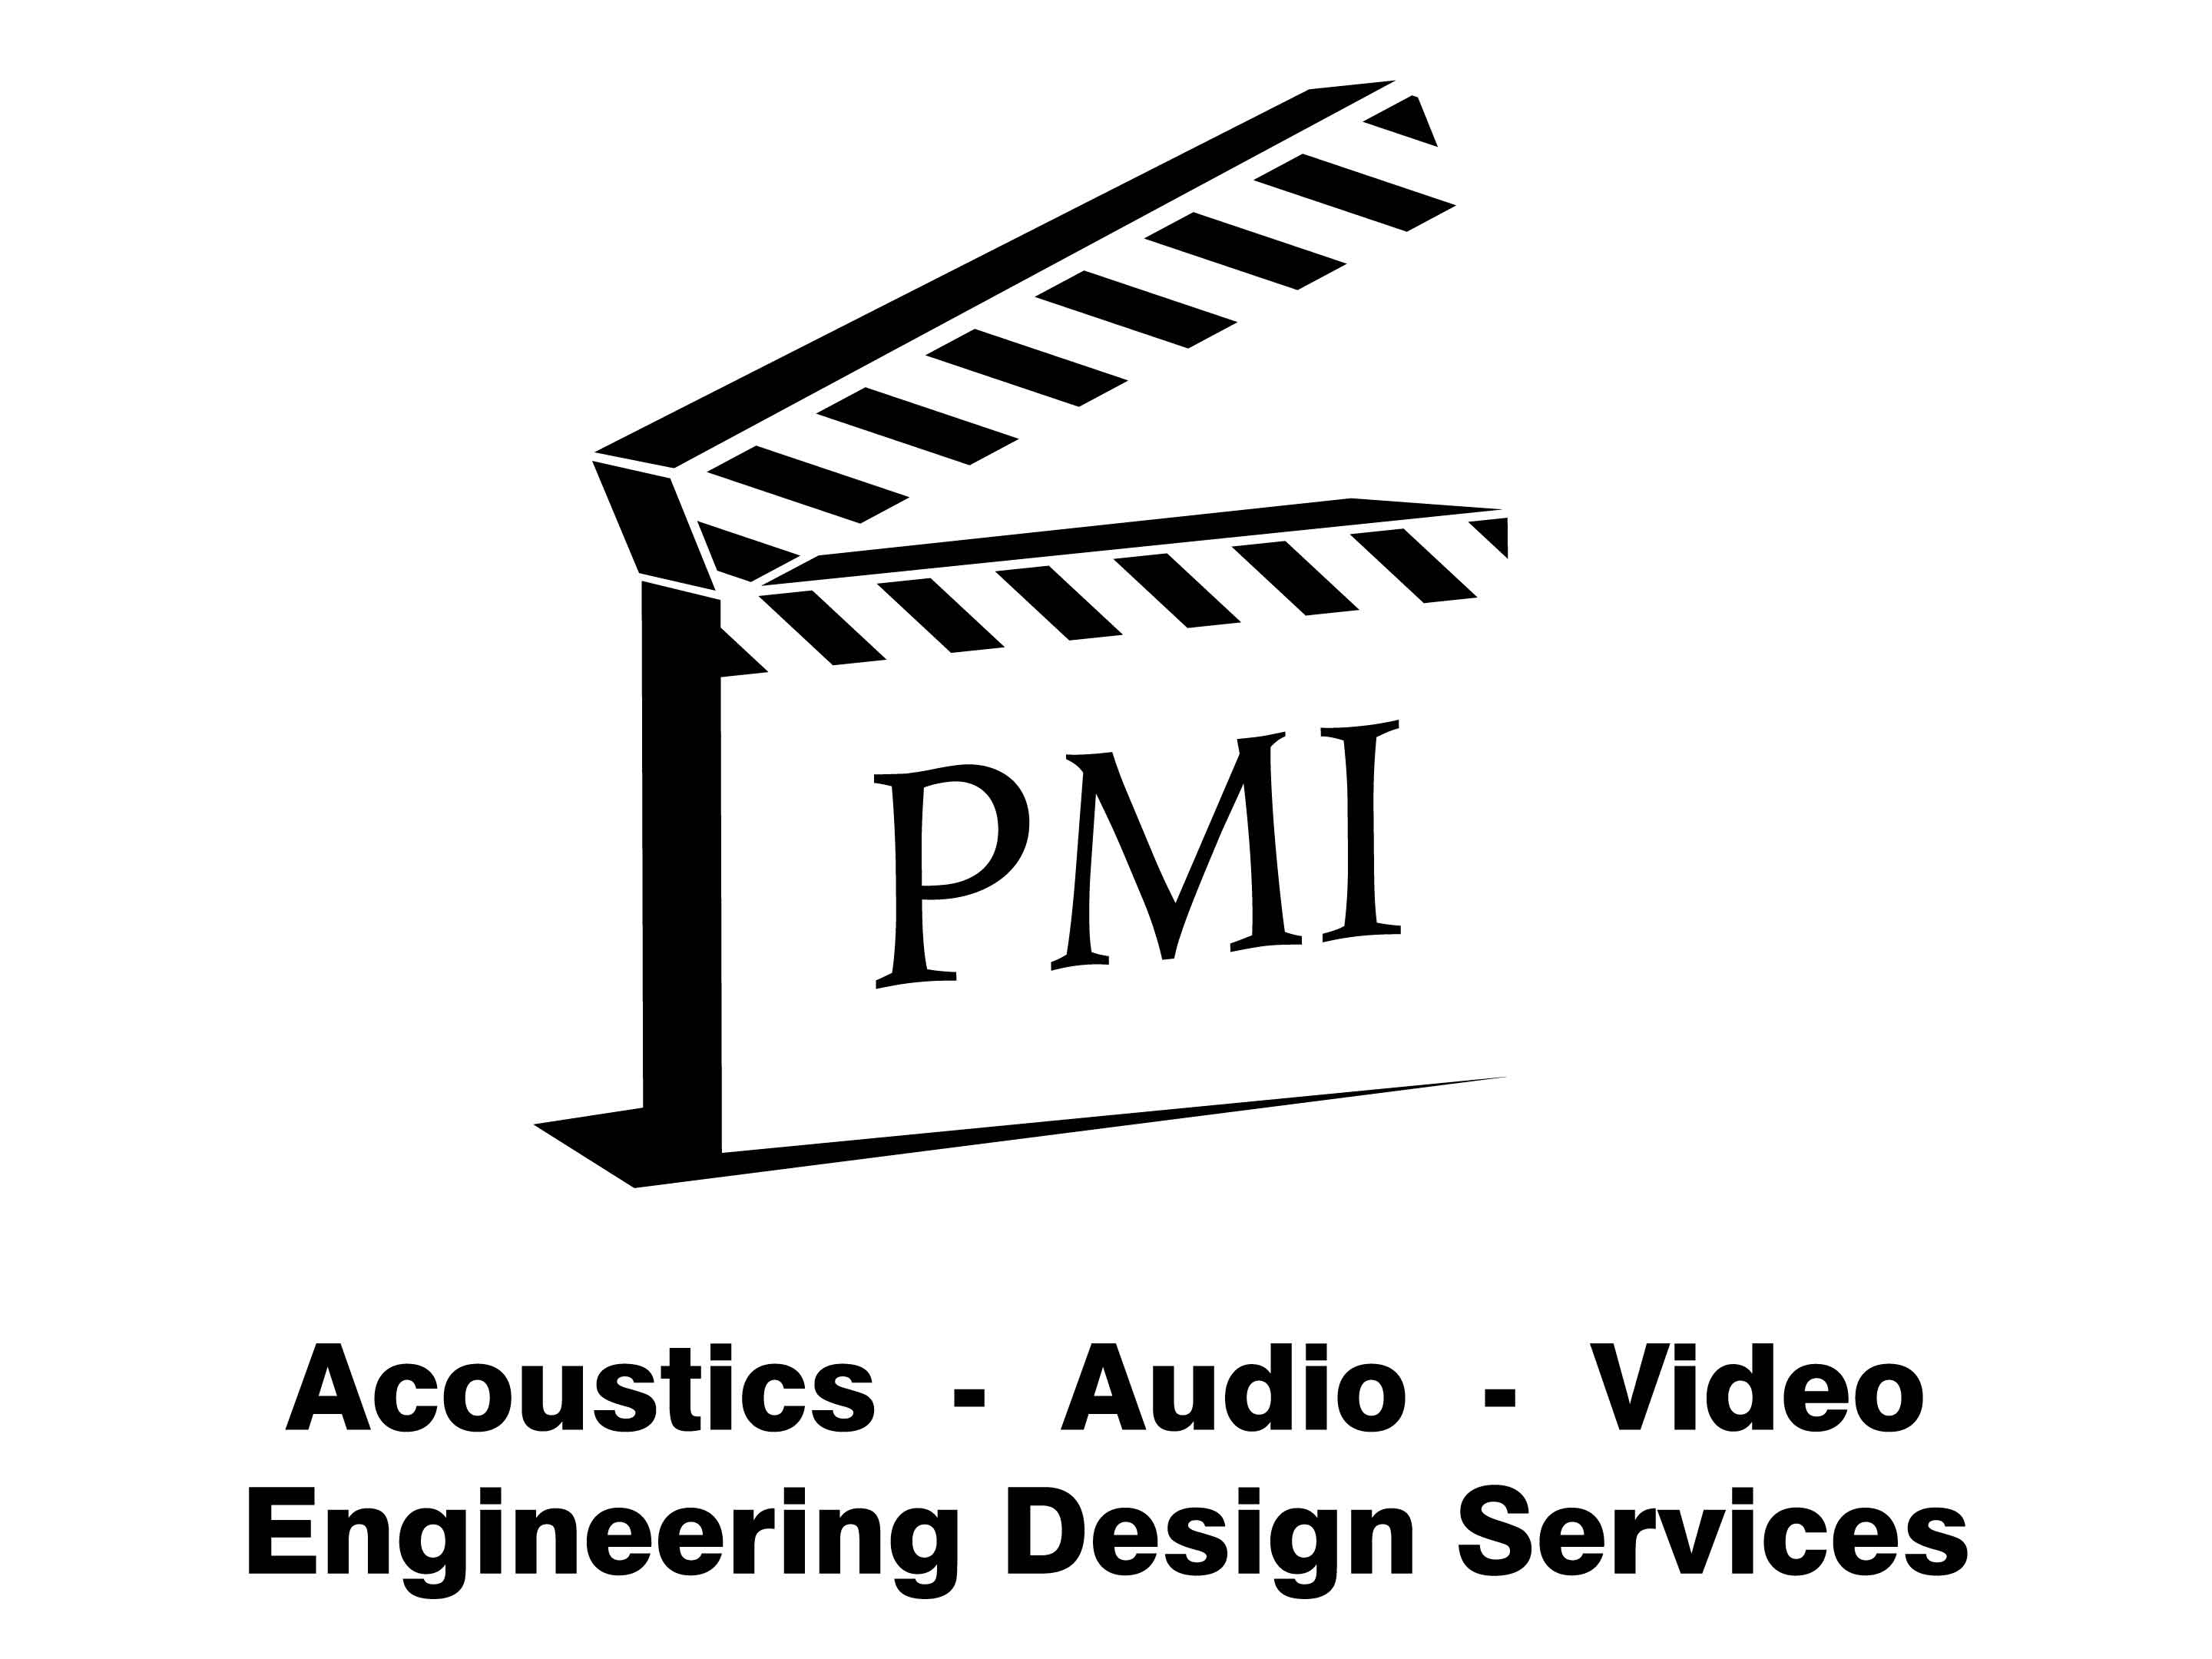 PMI acoustic design engineering.jpg